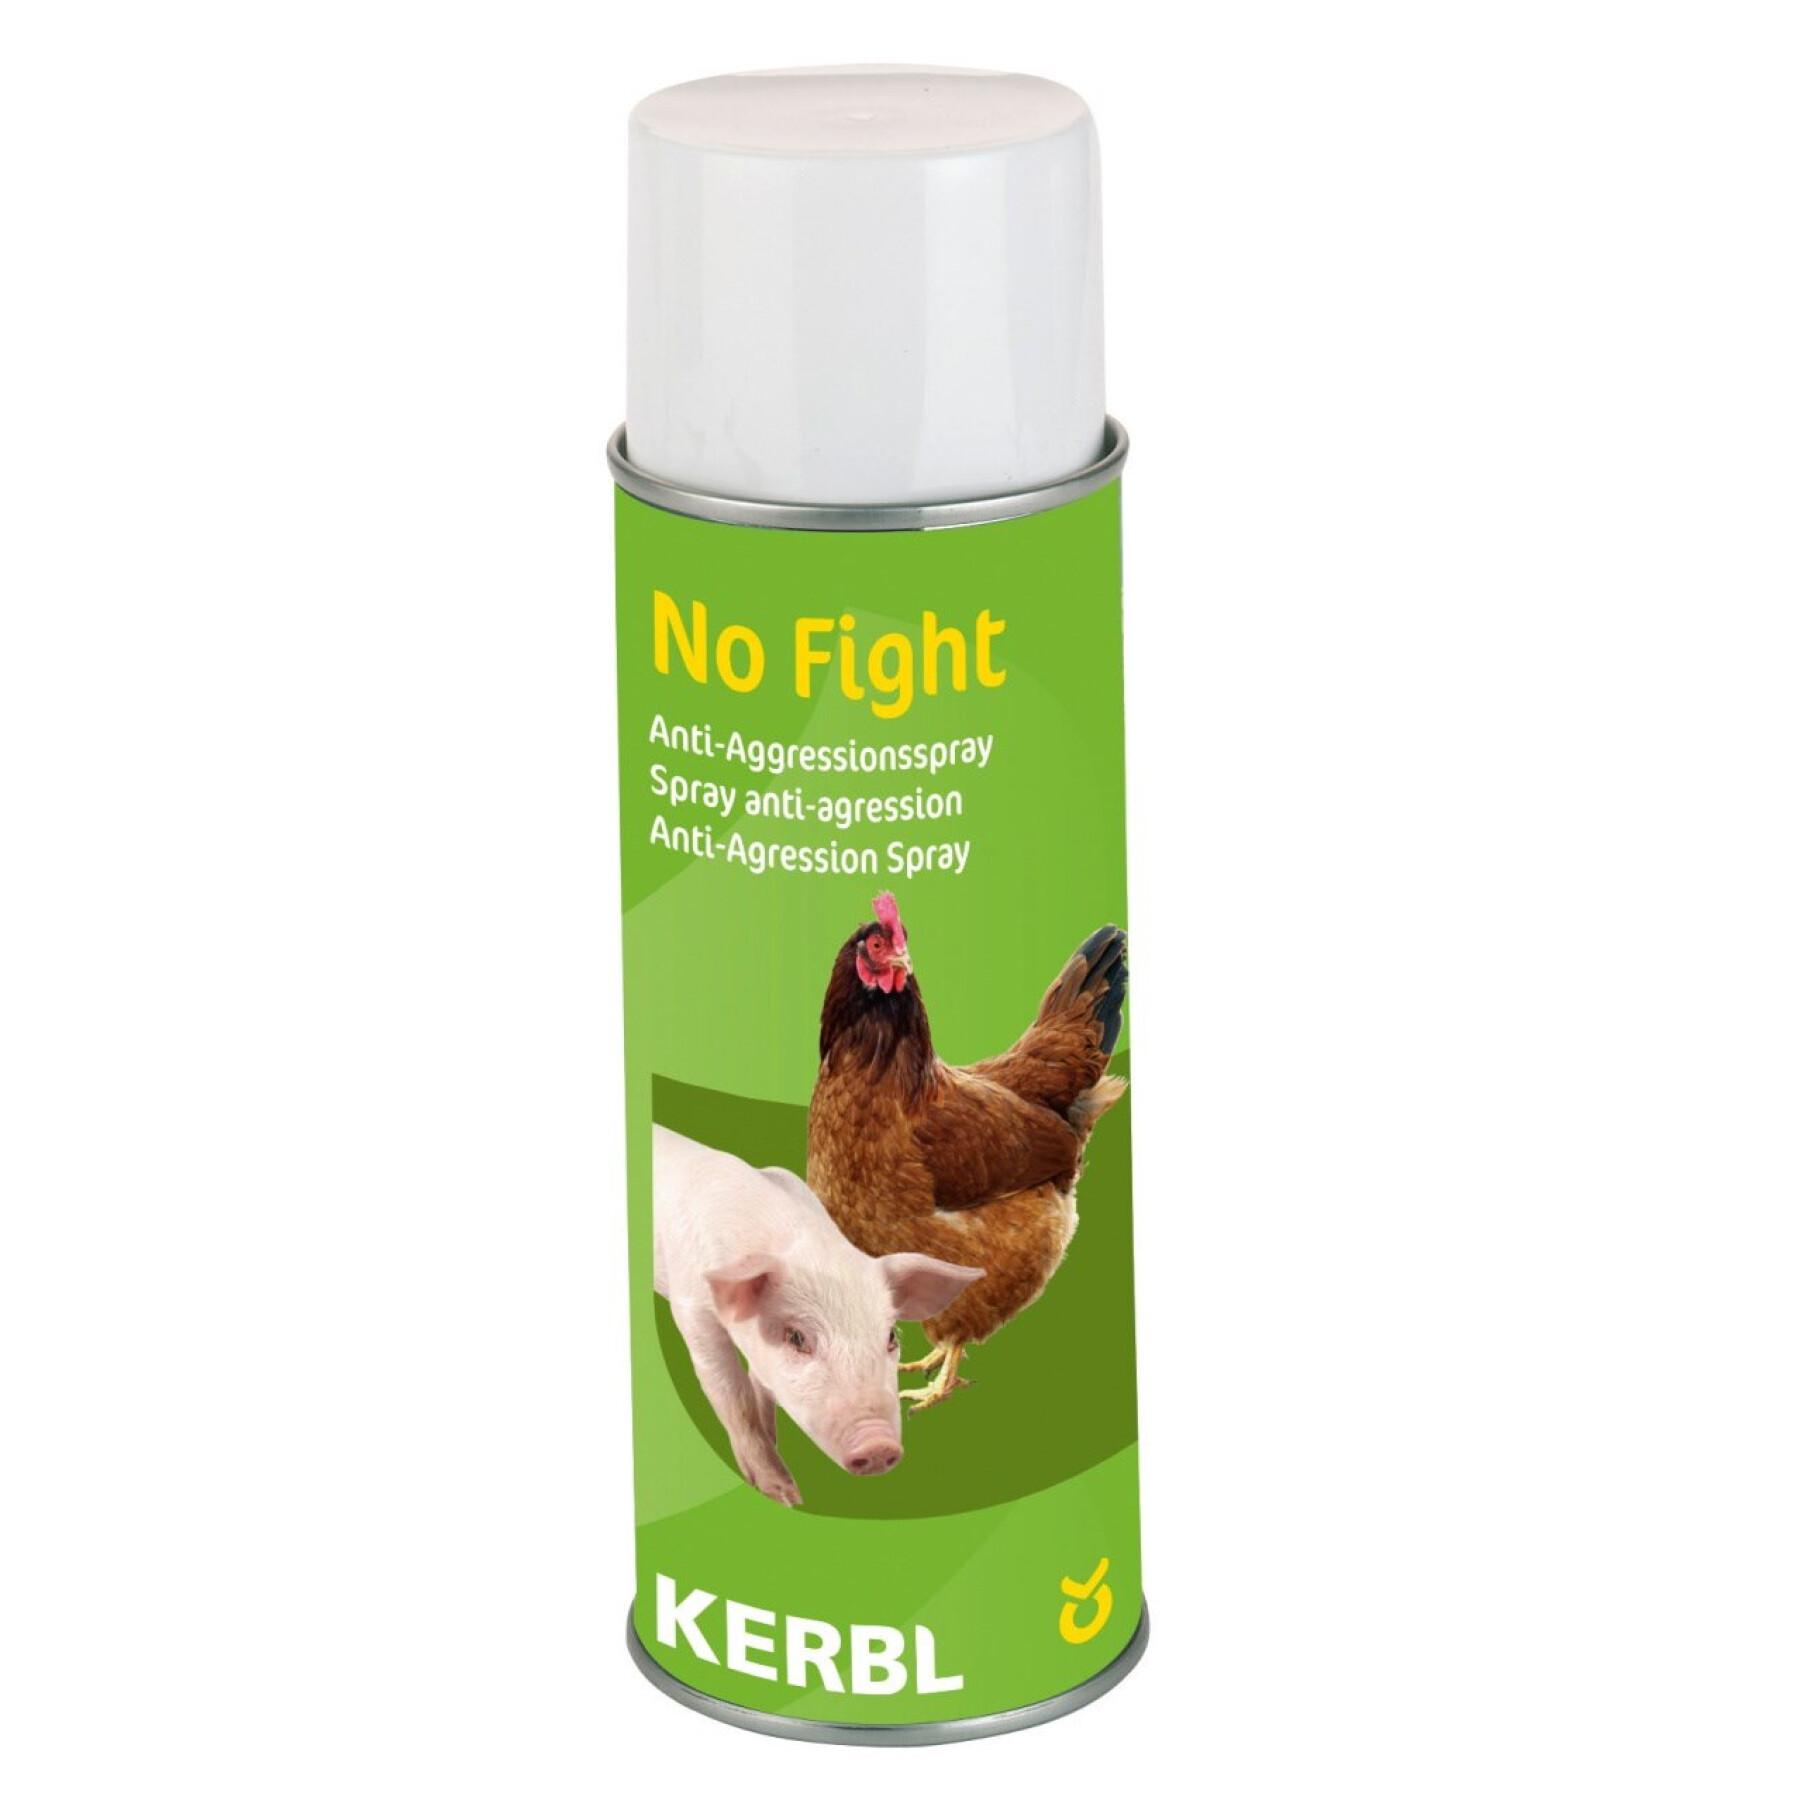 Anti-agressiespray voor varkens/pluimvee Kerbl No Fight